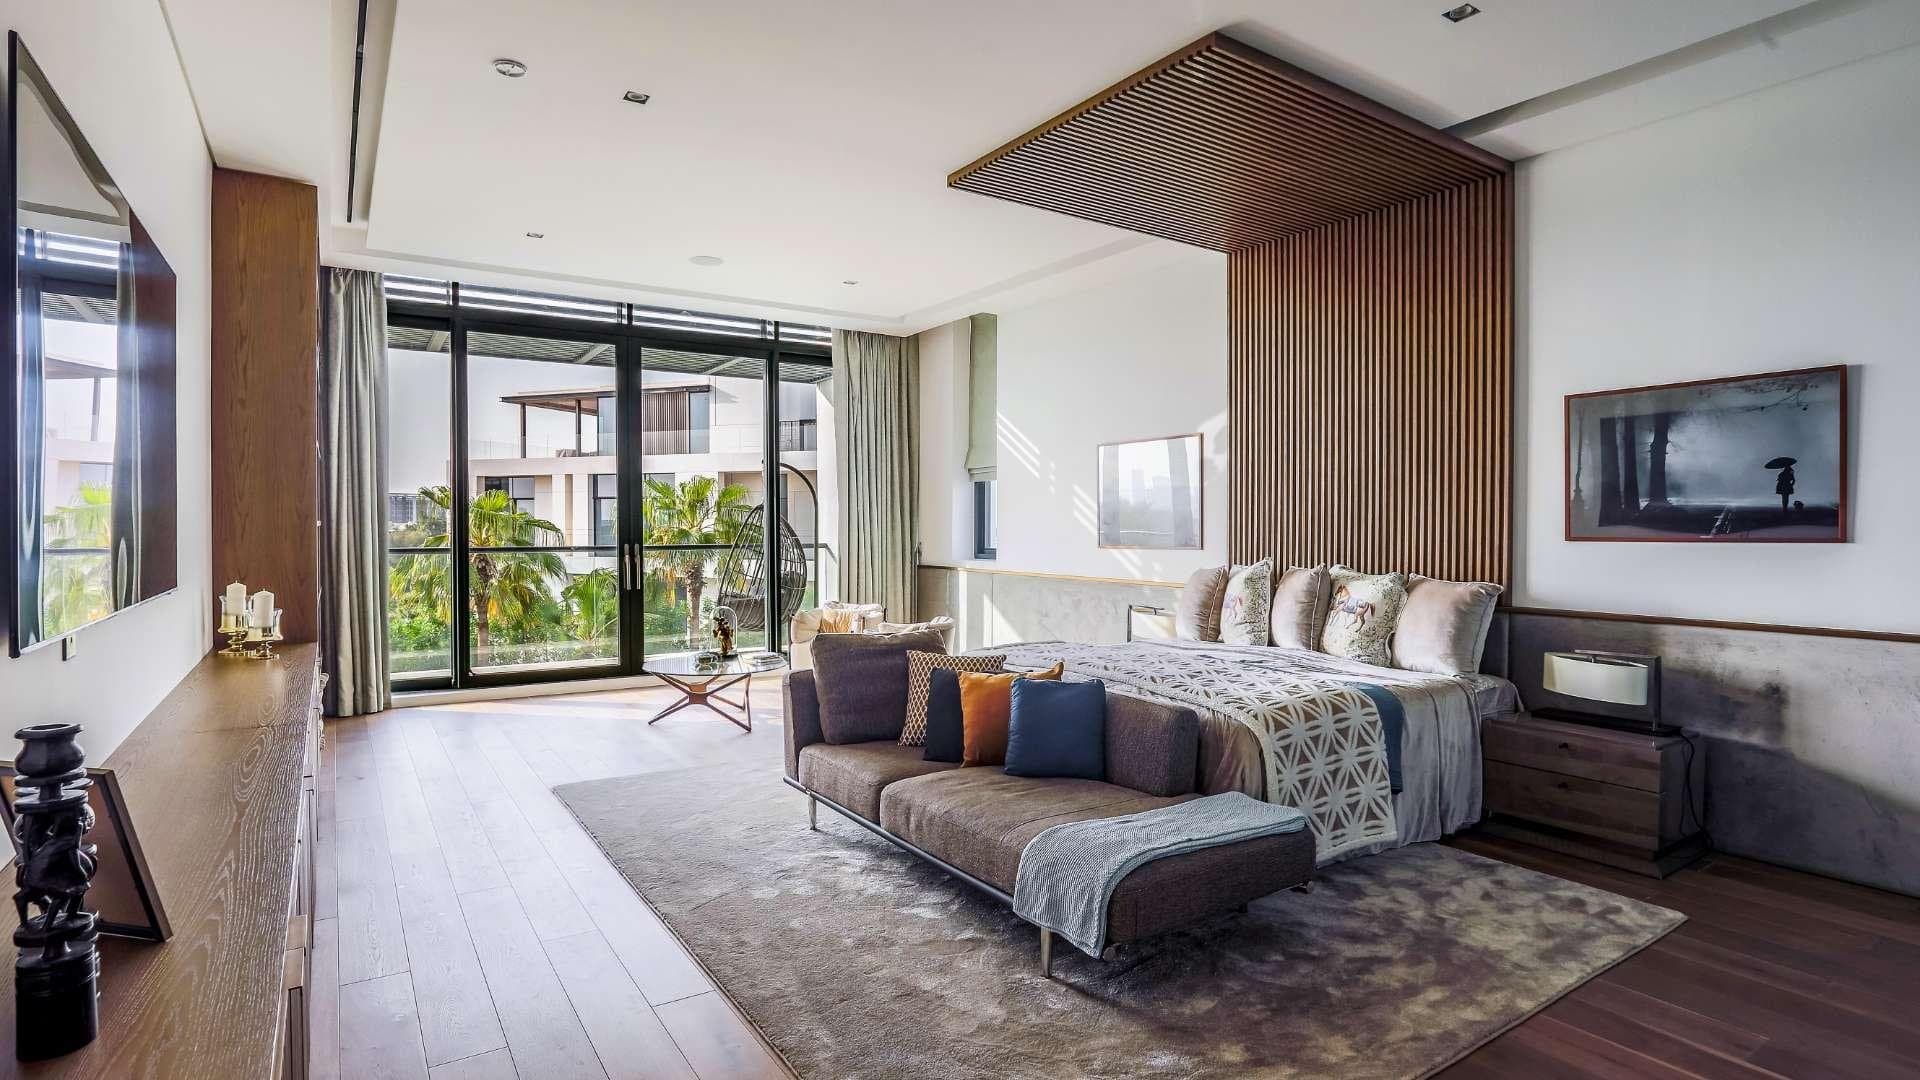 7 Bedroom Villa For Sale Dubai Hills View Lp18685 20f1d05a1c81260.jpg